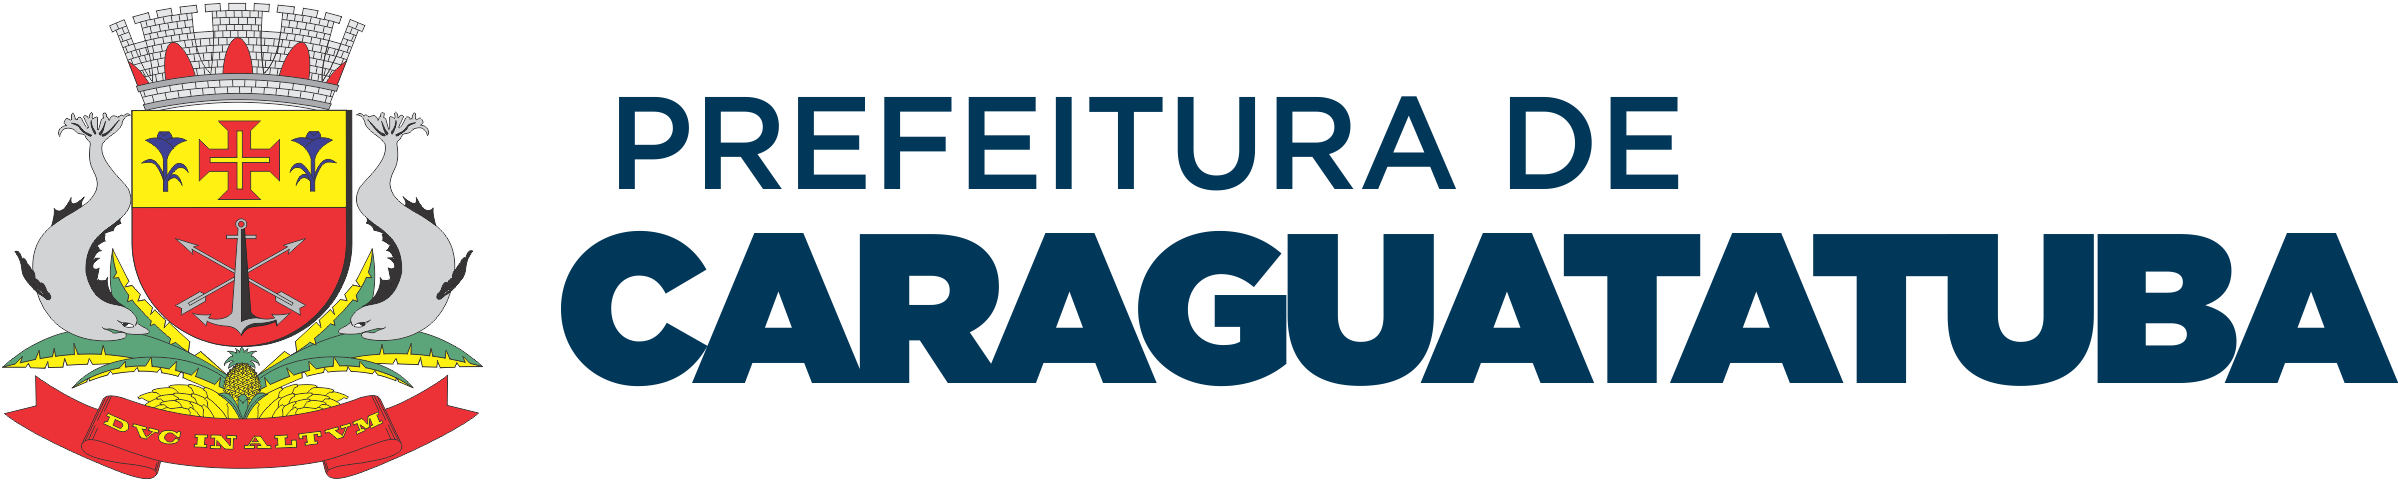 Logo da Prefeitura de Caraguatatuba